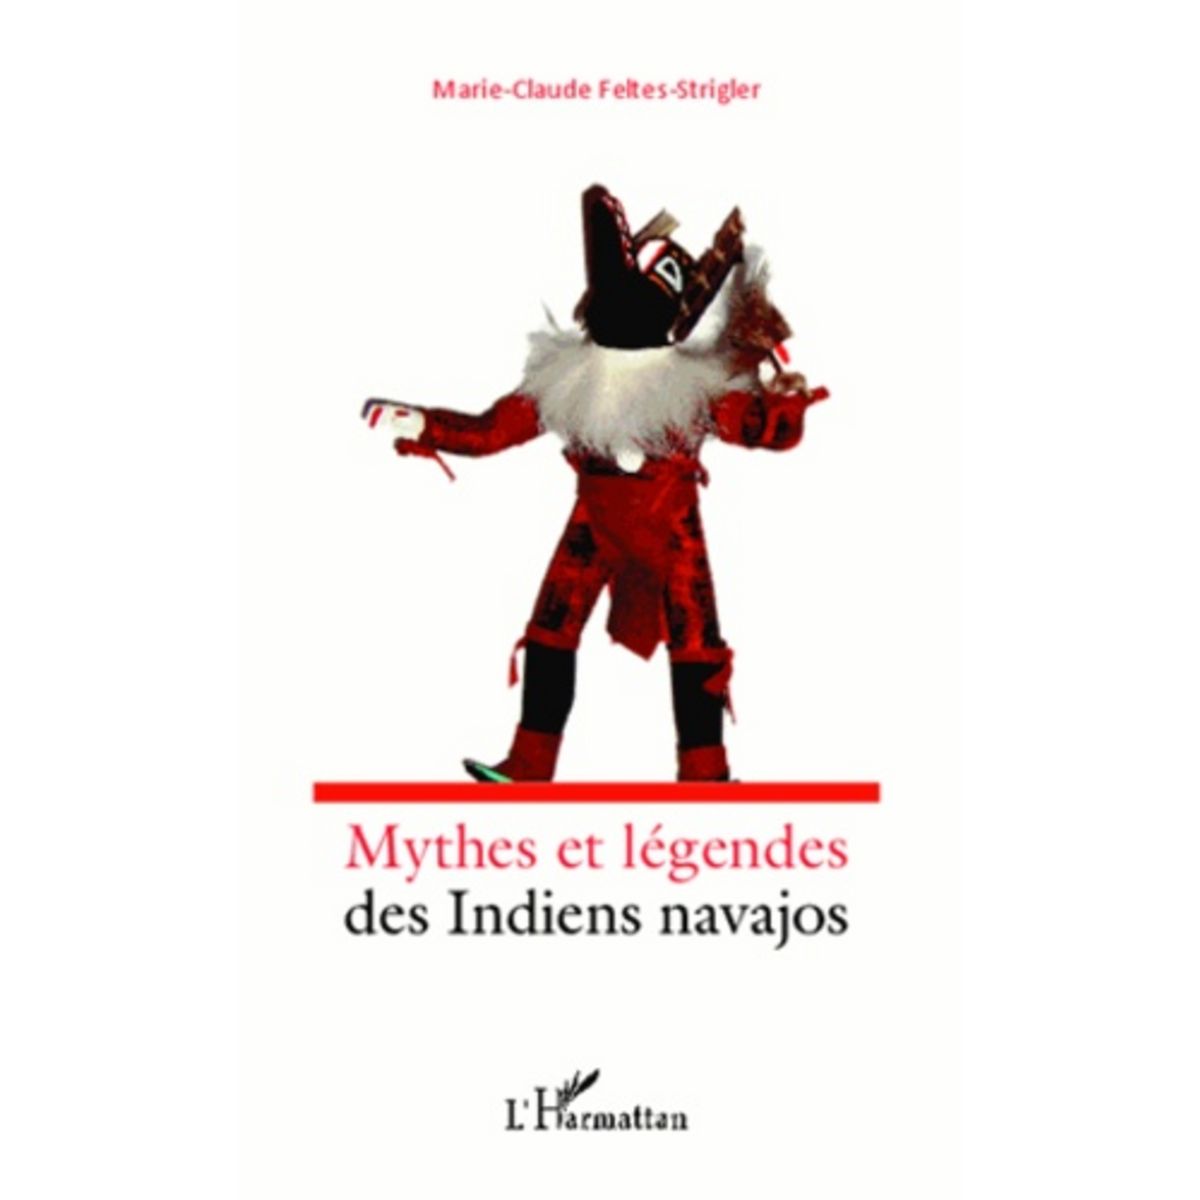  MYTHES ET LEGENDES DES INDIENS NAVAJOS, Feltes-Strigler Marie-Claude